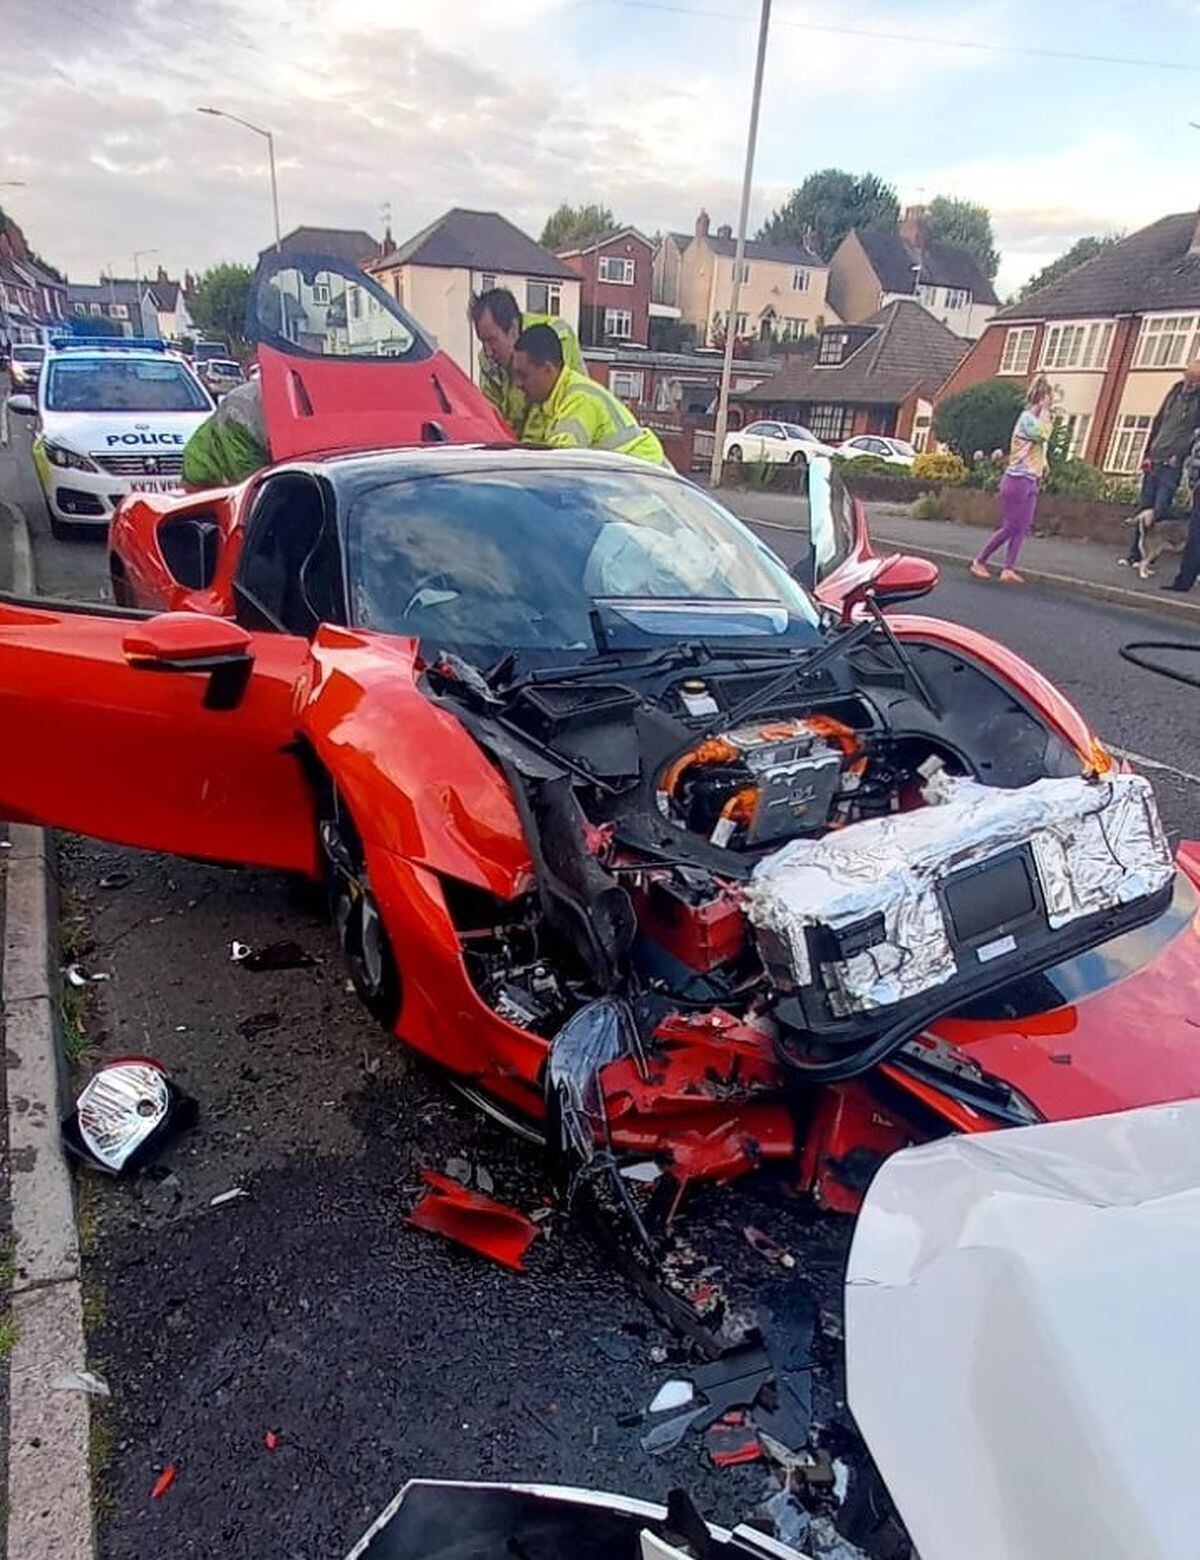 The Ferrari hit a parked car, causing a chain reaction behind it. Photo: Haden Cross Fire Station